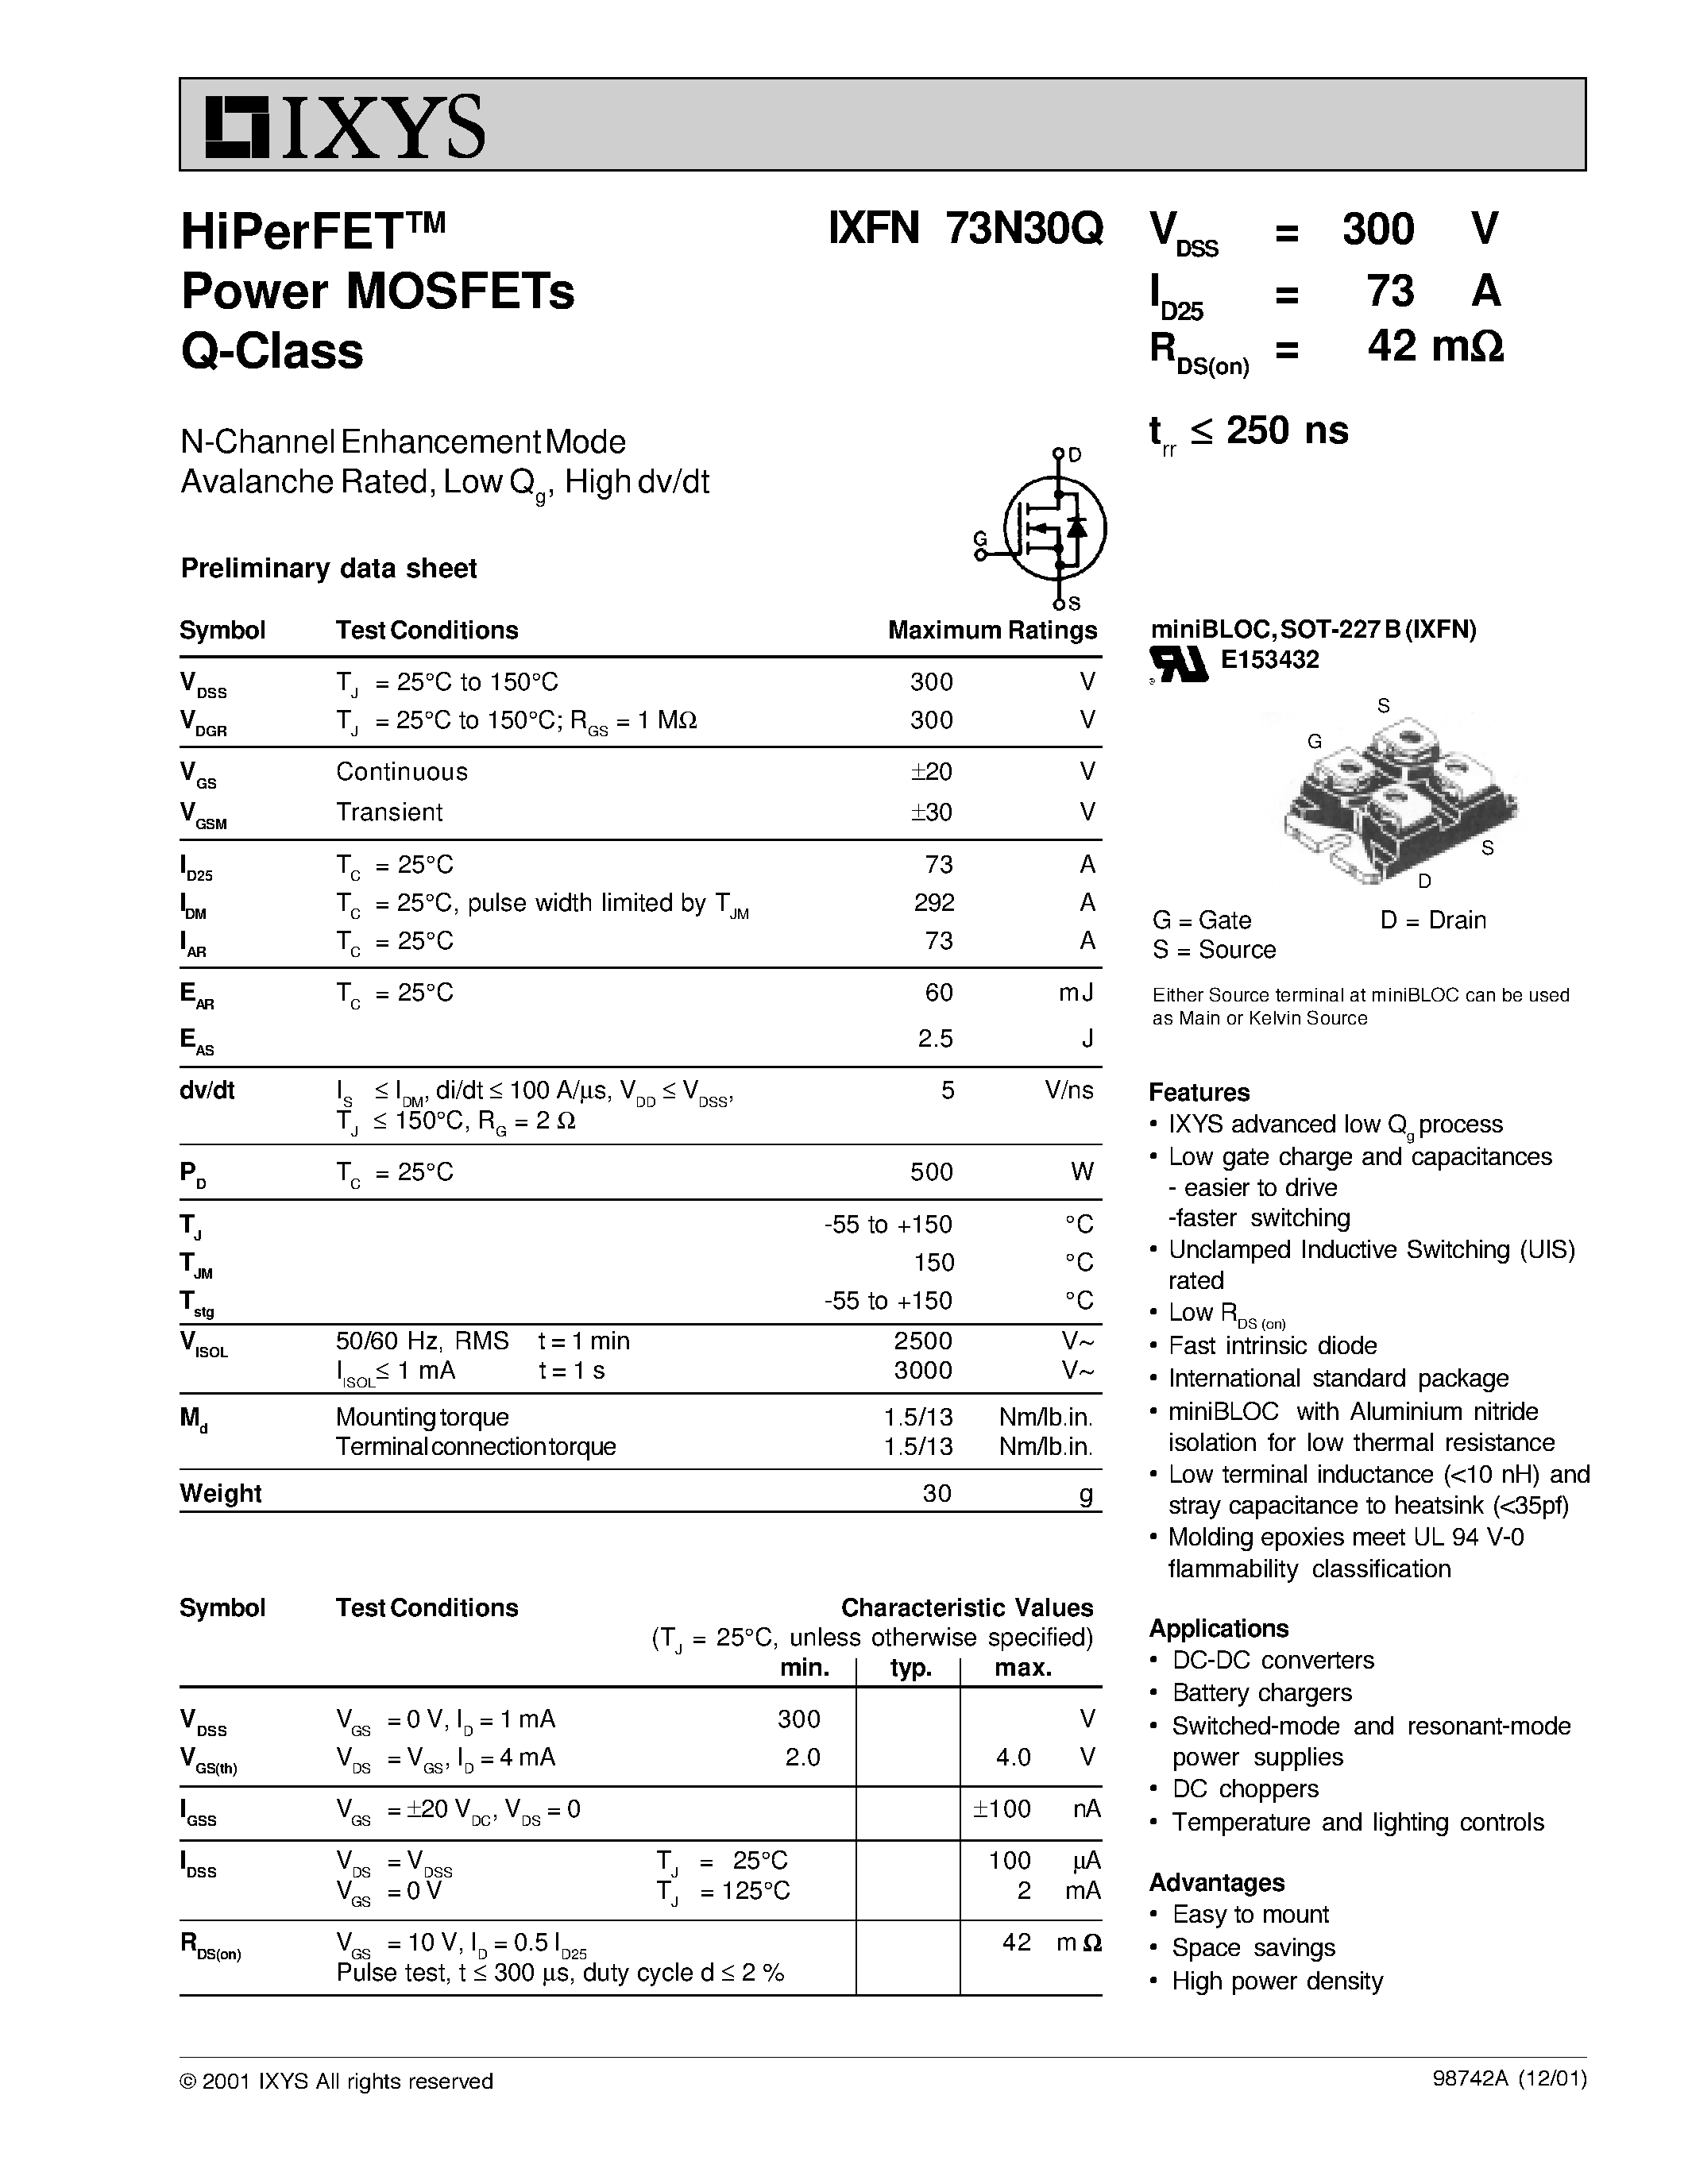 Даташит IXFN73N30Q - HiPerFET Power MOSFETs Q-Class страница 1